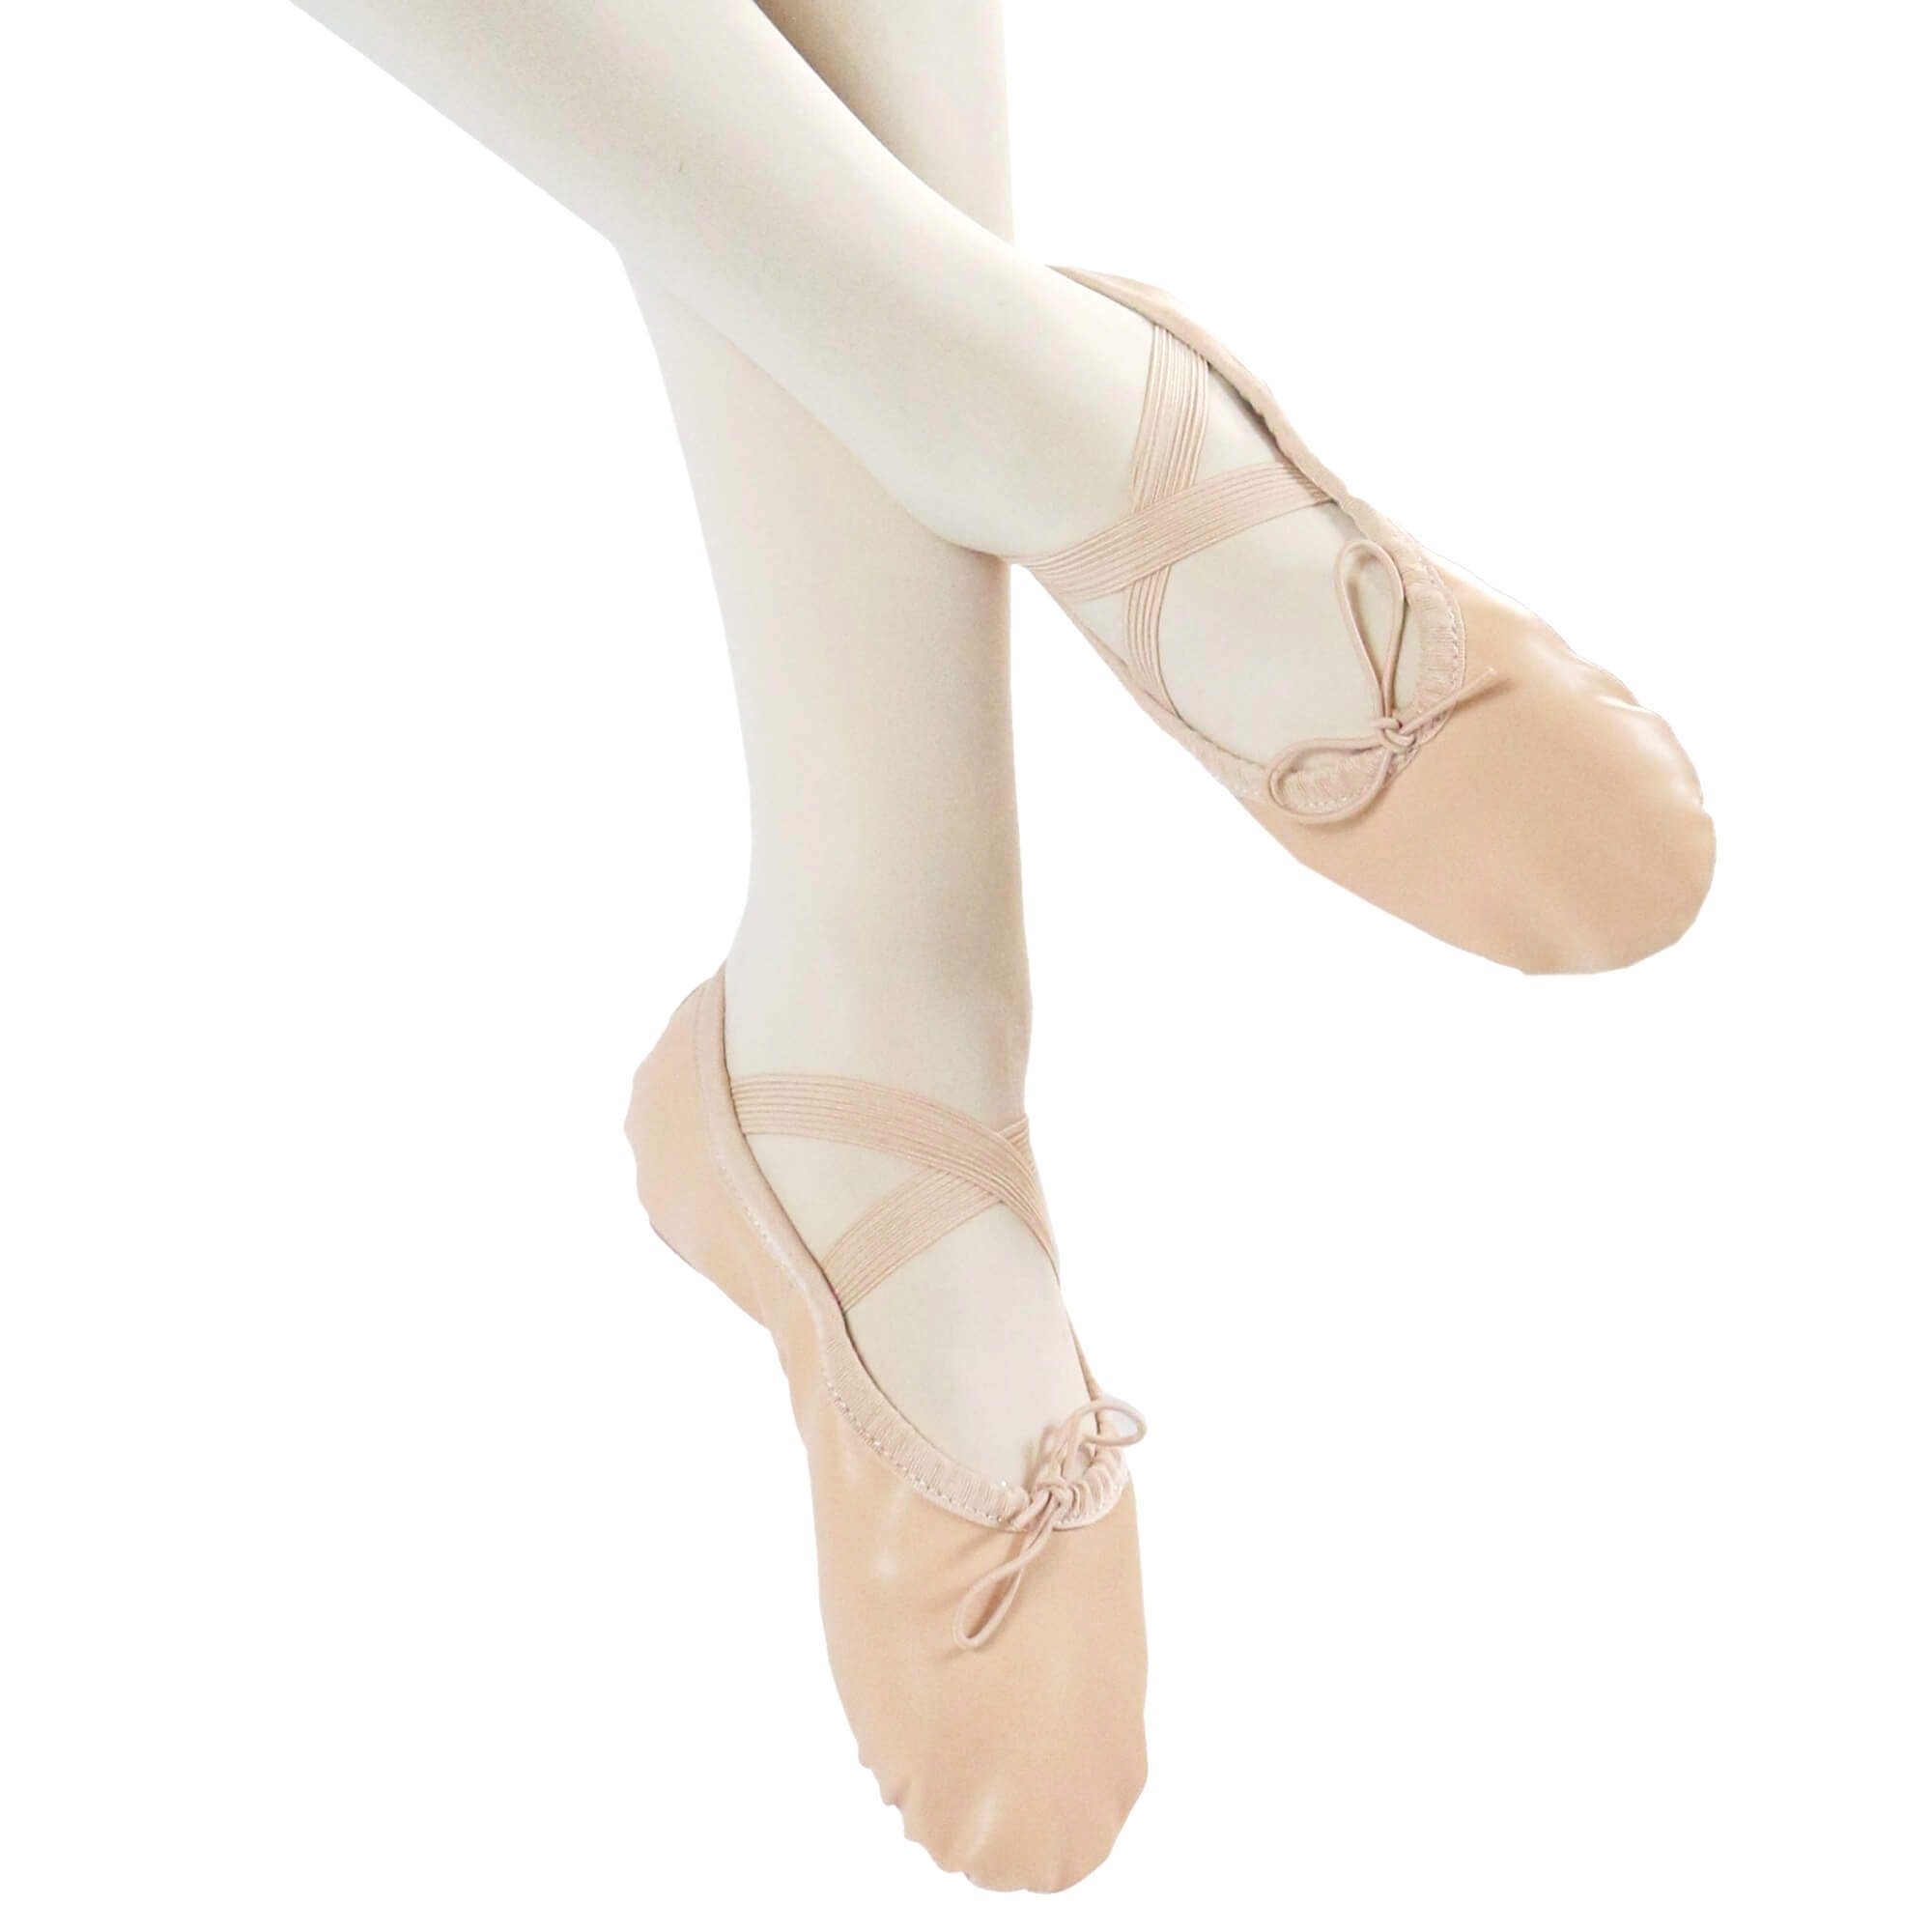 Danzcue Child Split Sole Leather Ballet Dance Slipper - Click Image to Close